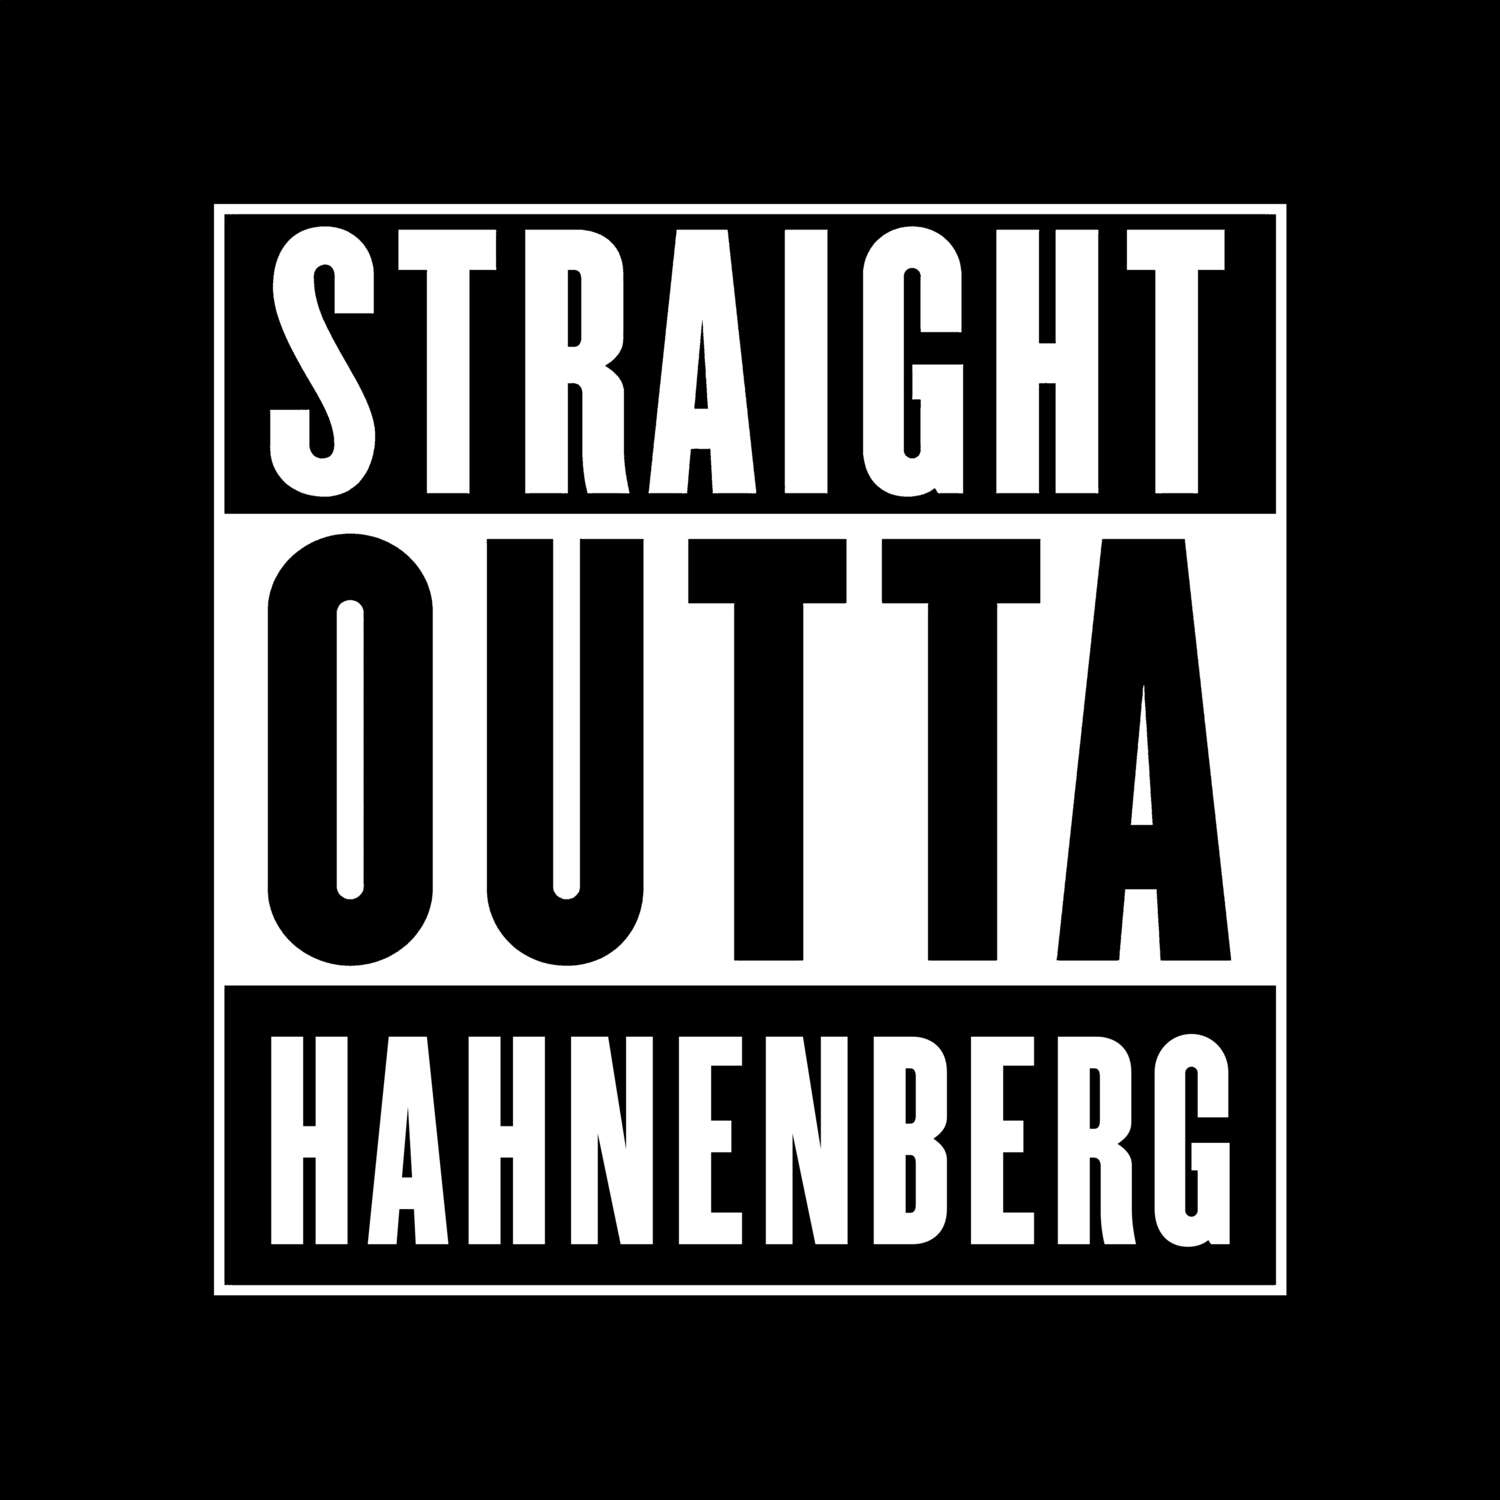 Hahnenberg T-Shirt »Straight Outta«